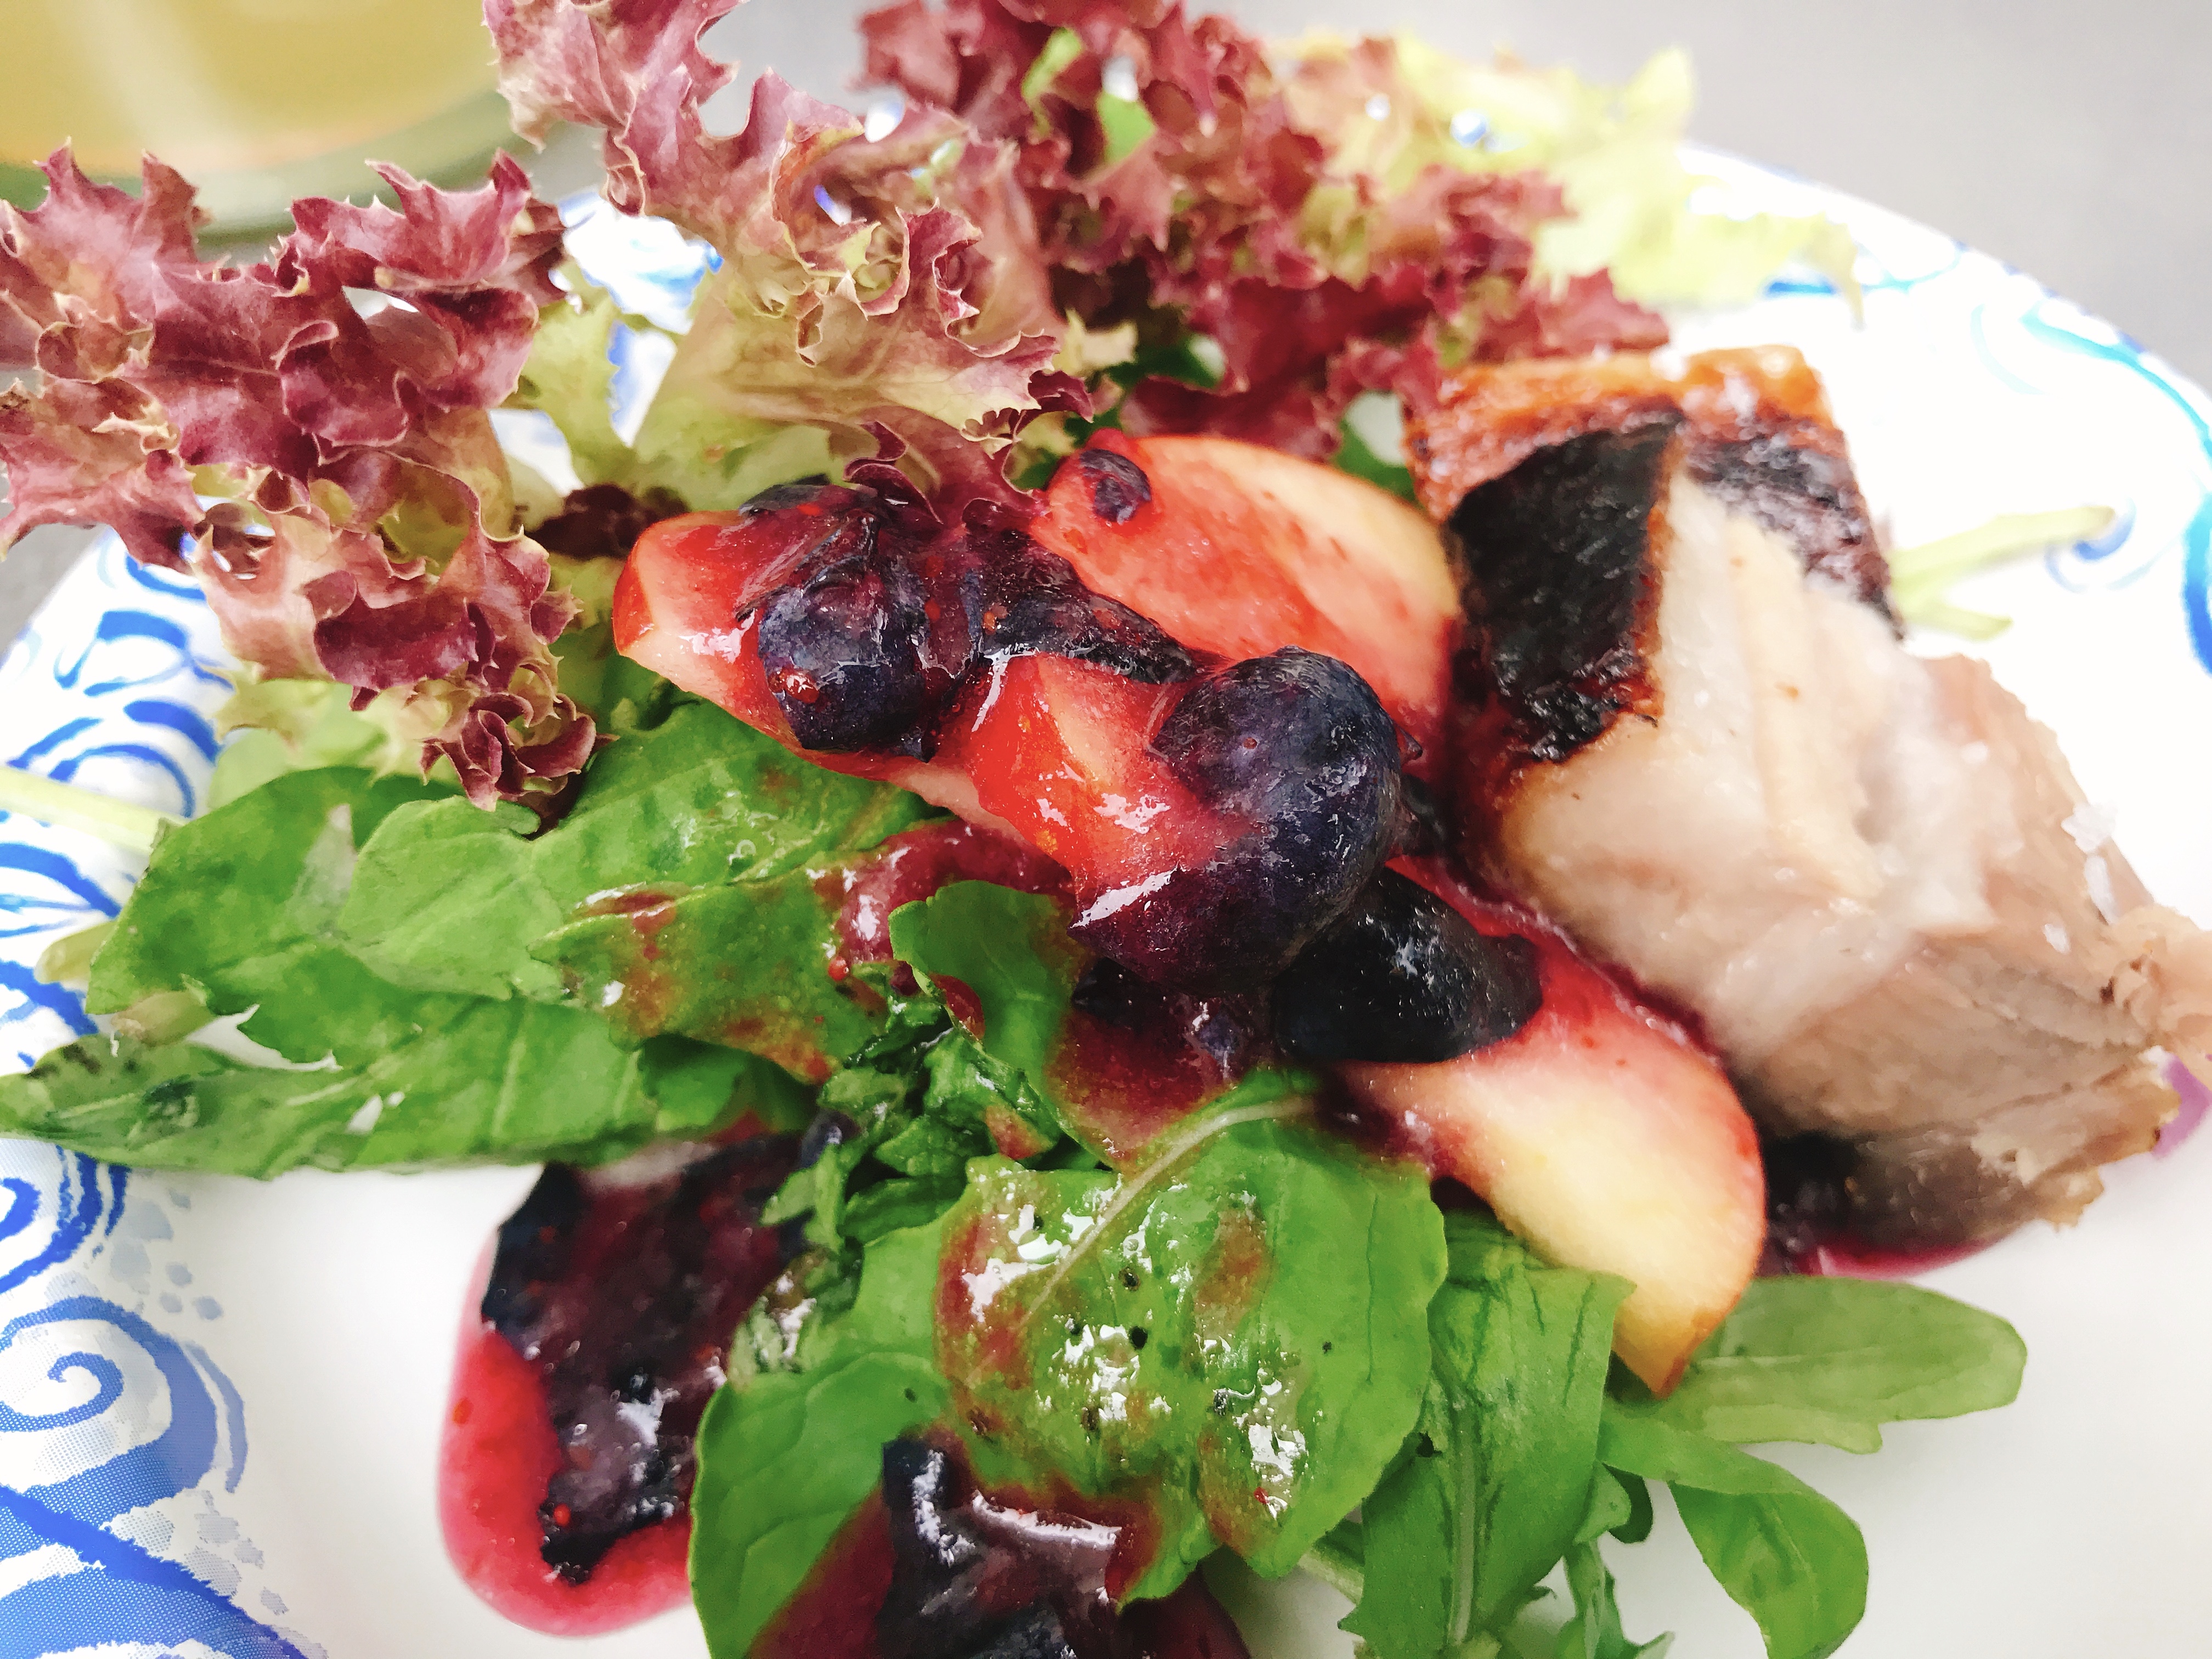 Braised Pork with Cider Glaze and Blueberry Vinaigrette Salad